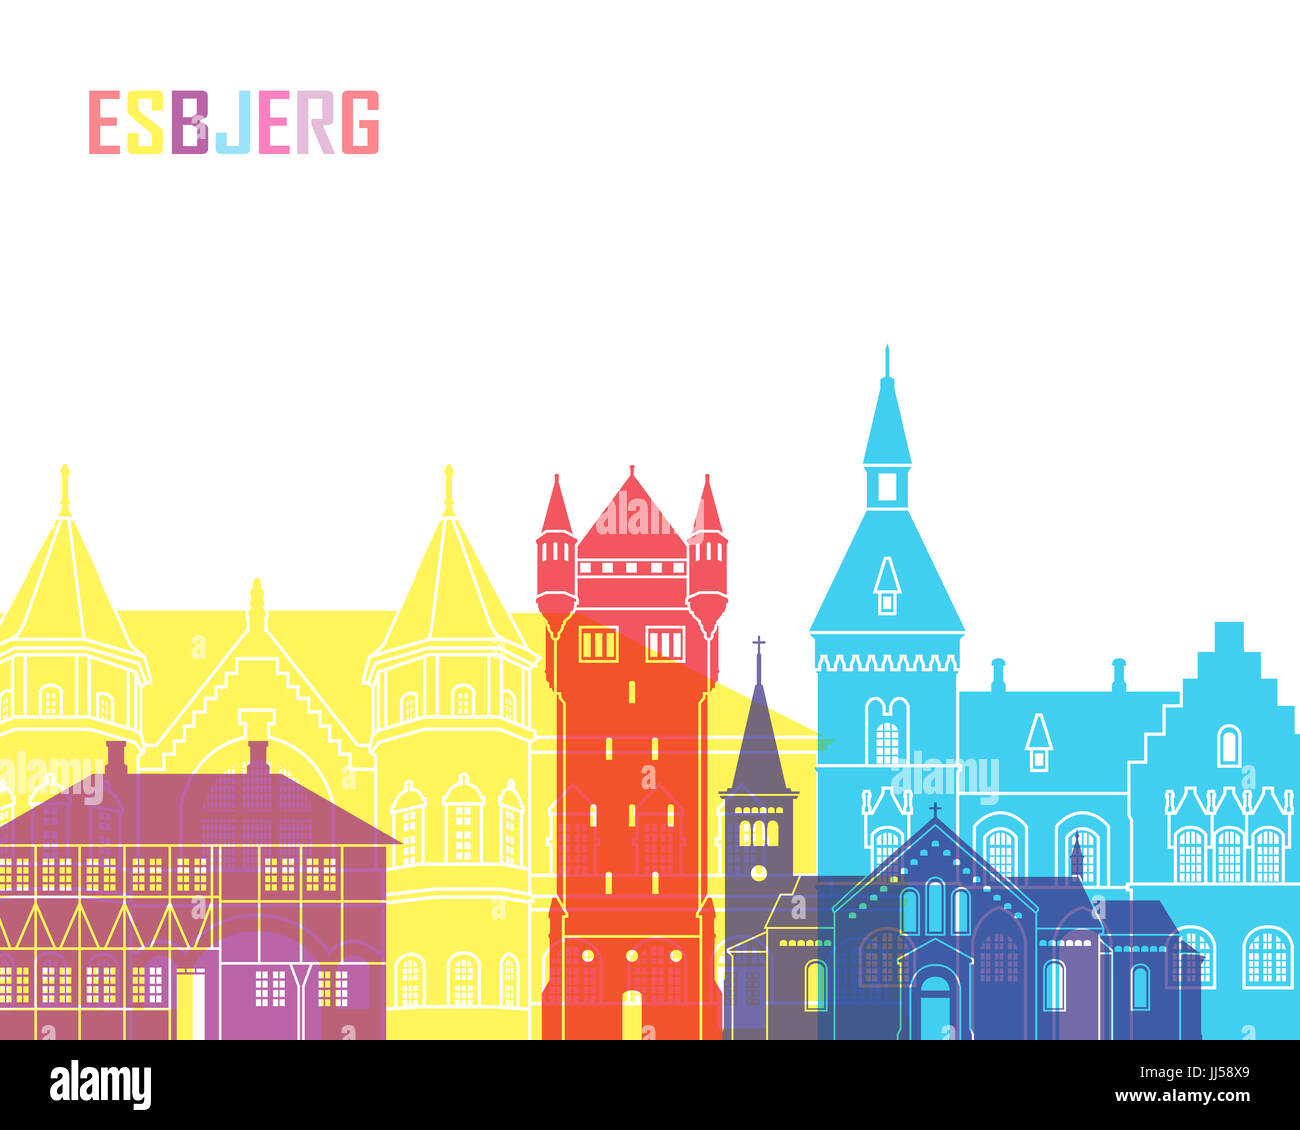 Esbjerg skyline pop in editable vector file Stock Photo